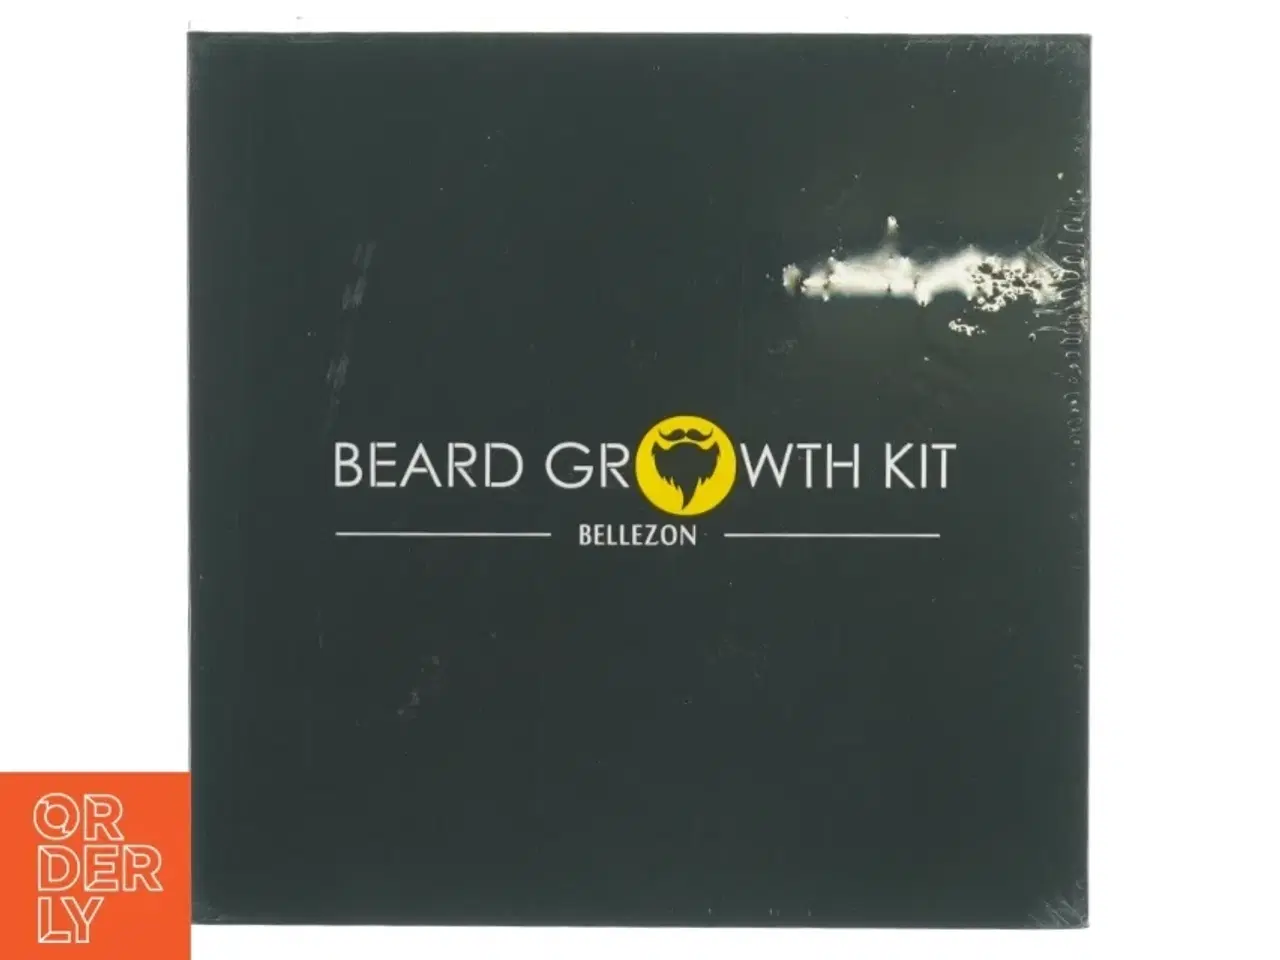 Billede 1 - Beard Growth kit fra Bellezon